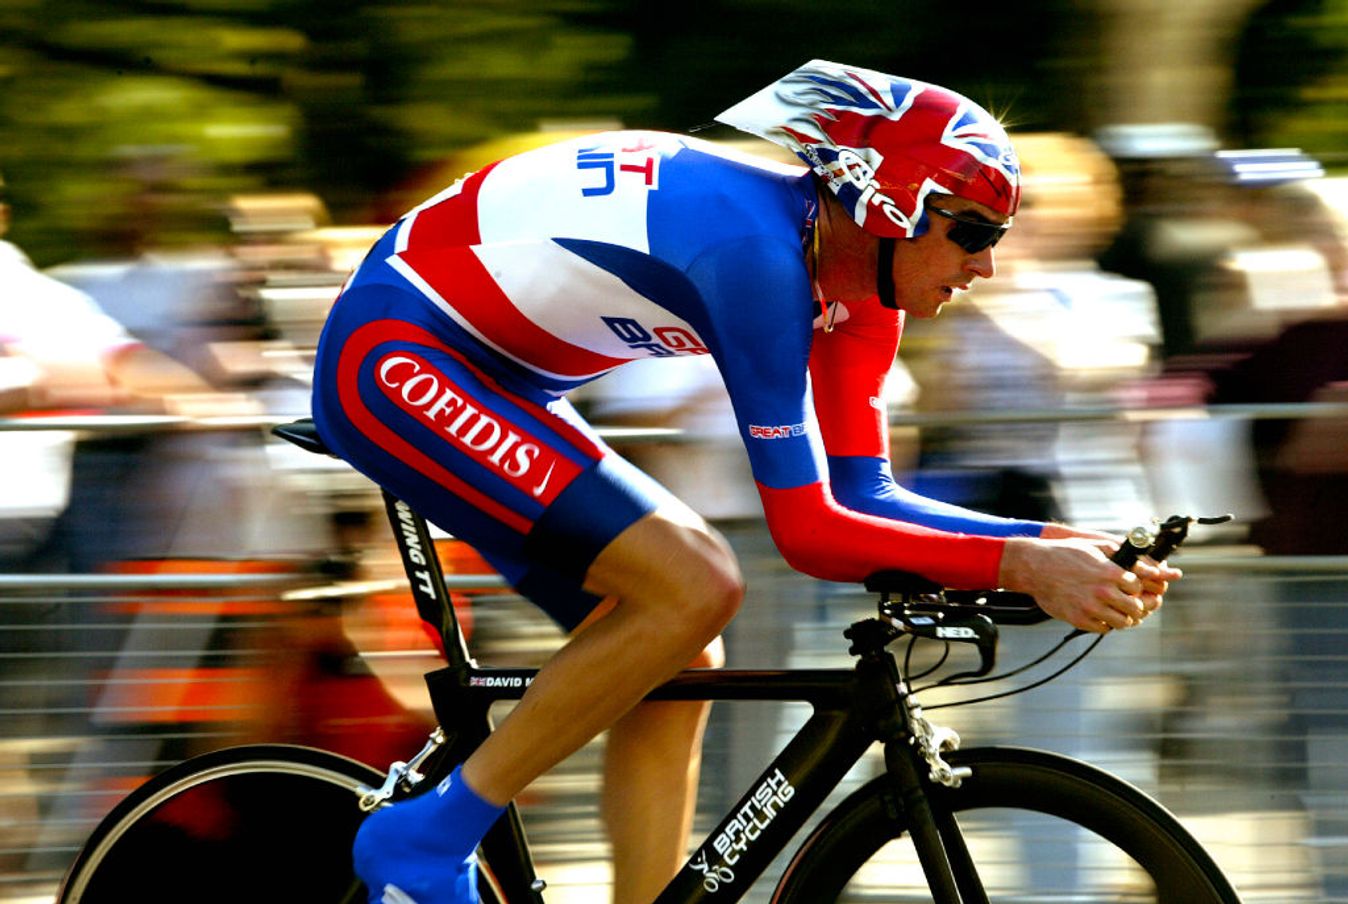 David Millar riding a non-Decathlon at TT Worlds in 2003